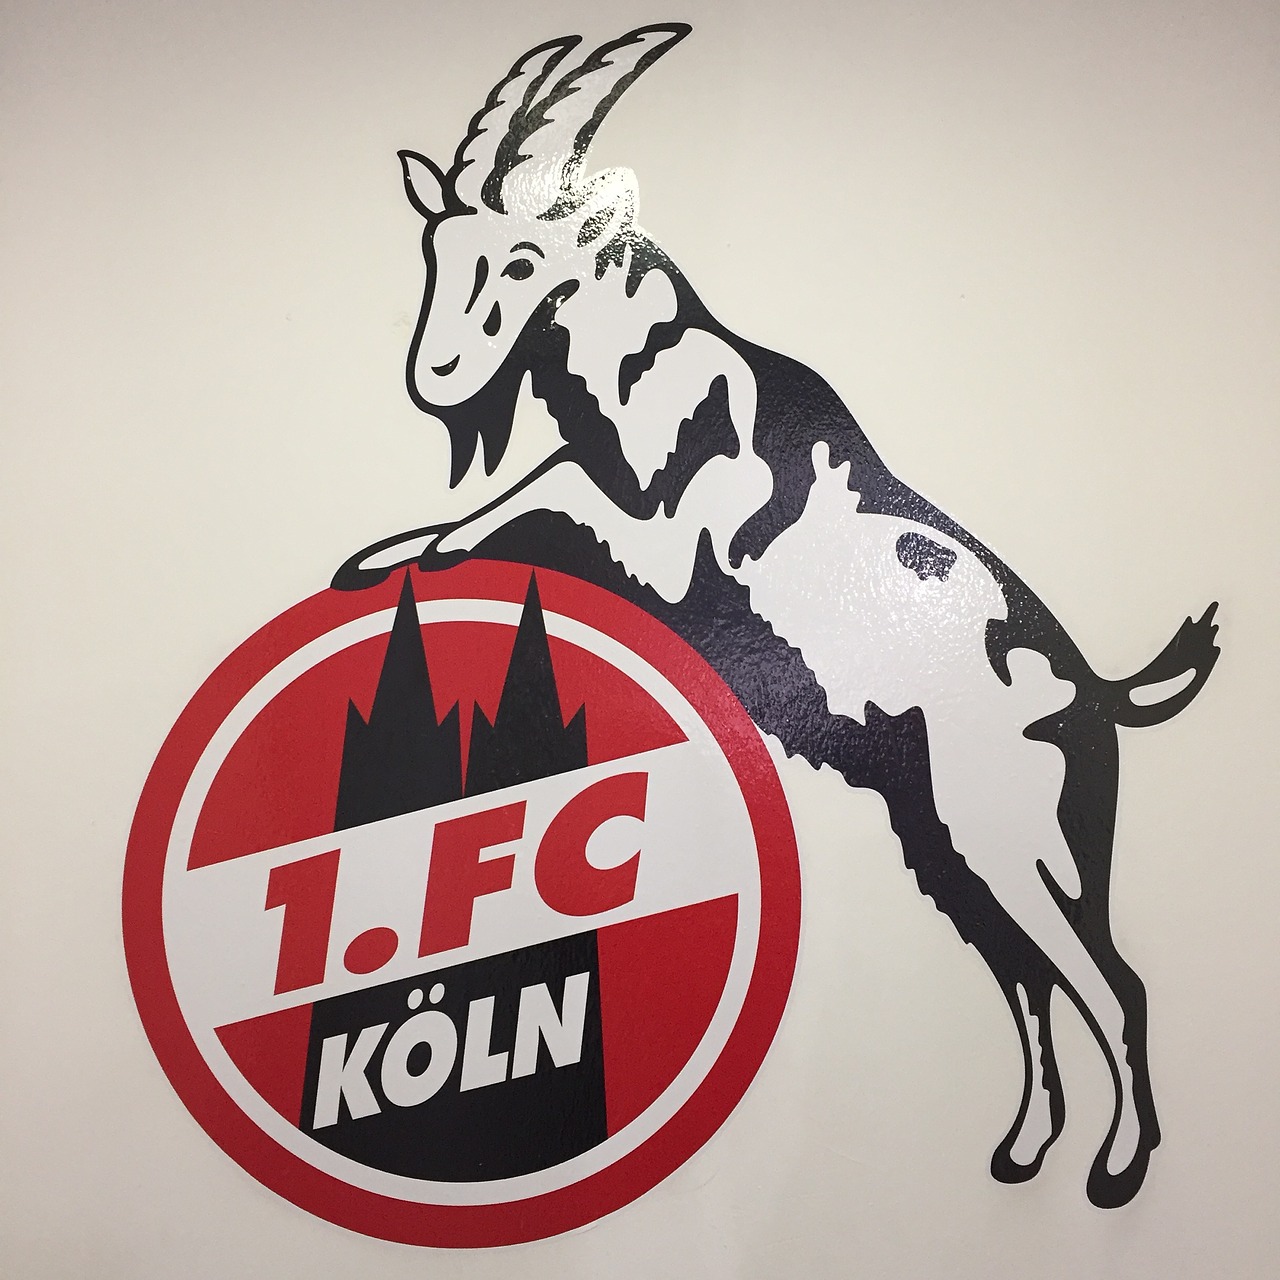 Fc köln,bundesliga,logo,football,club - free image from needpix.com